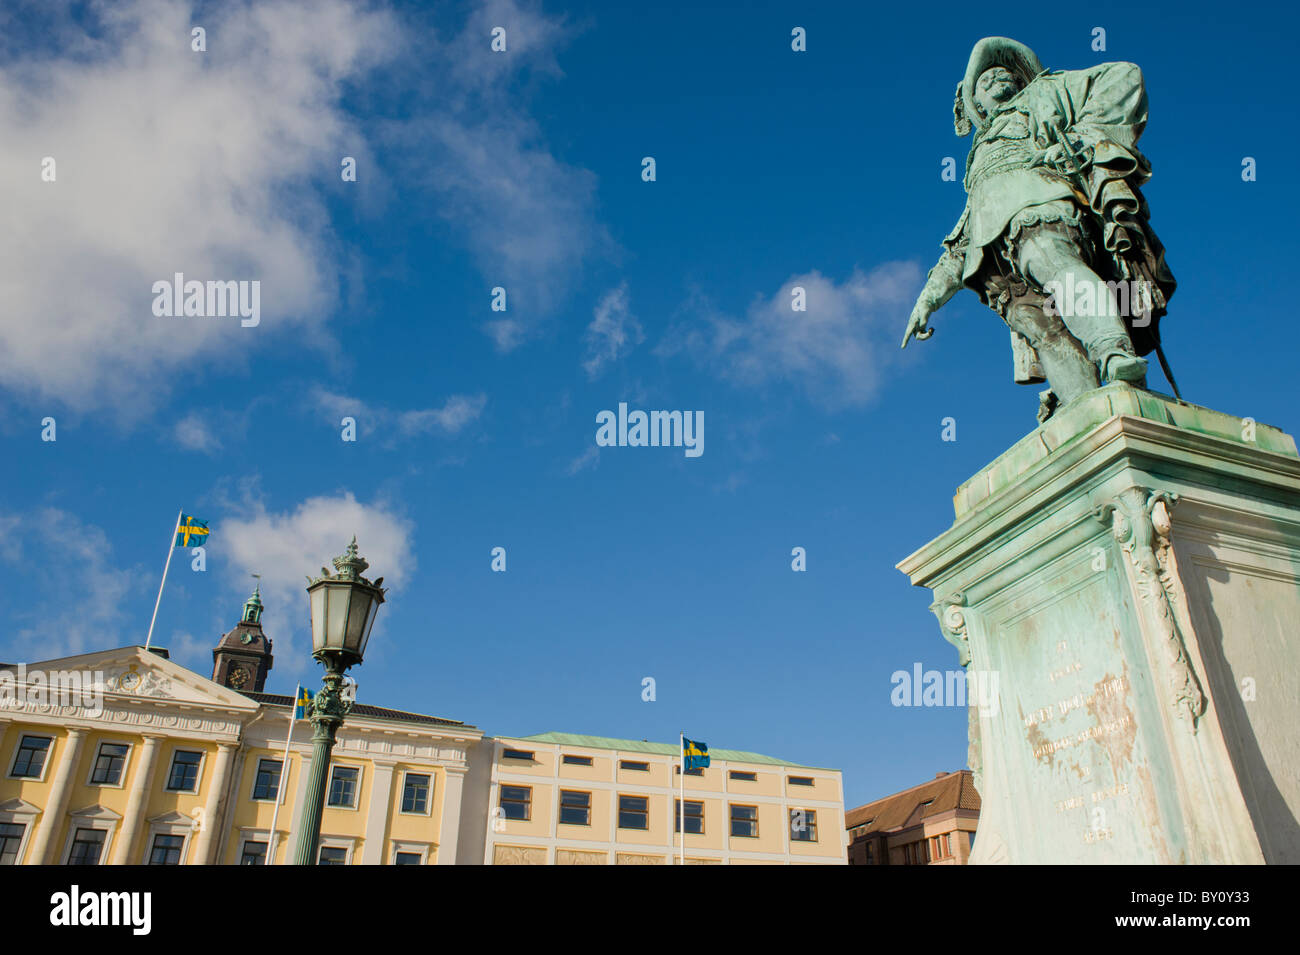 Statue of King Gustavus Adolphus of Sweden, in Gustavus Adolphus Square, Gothenburg. (Digitally altered; see image description) Stock Photo